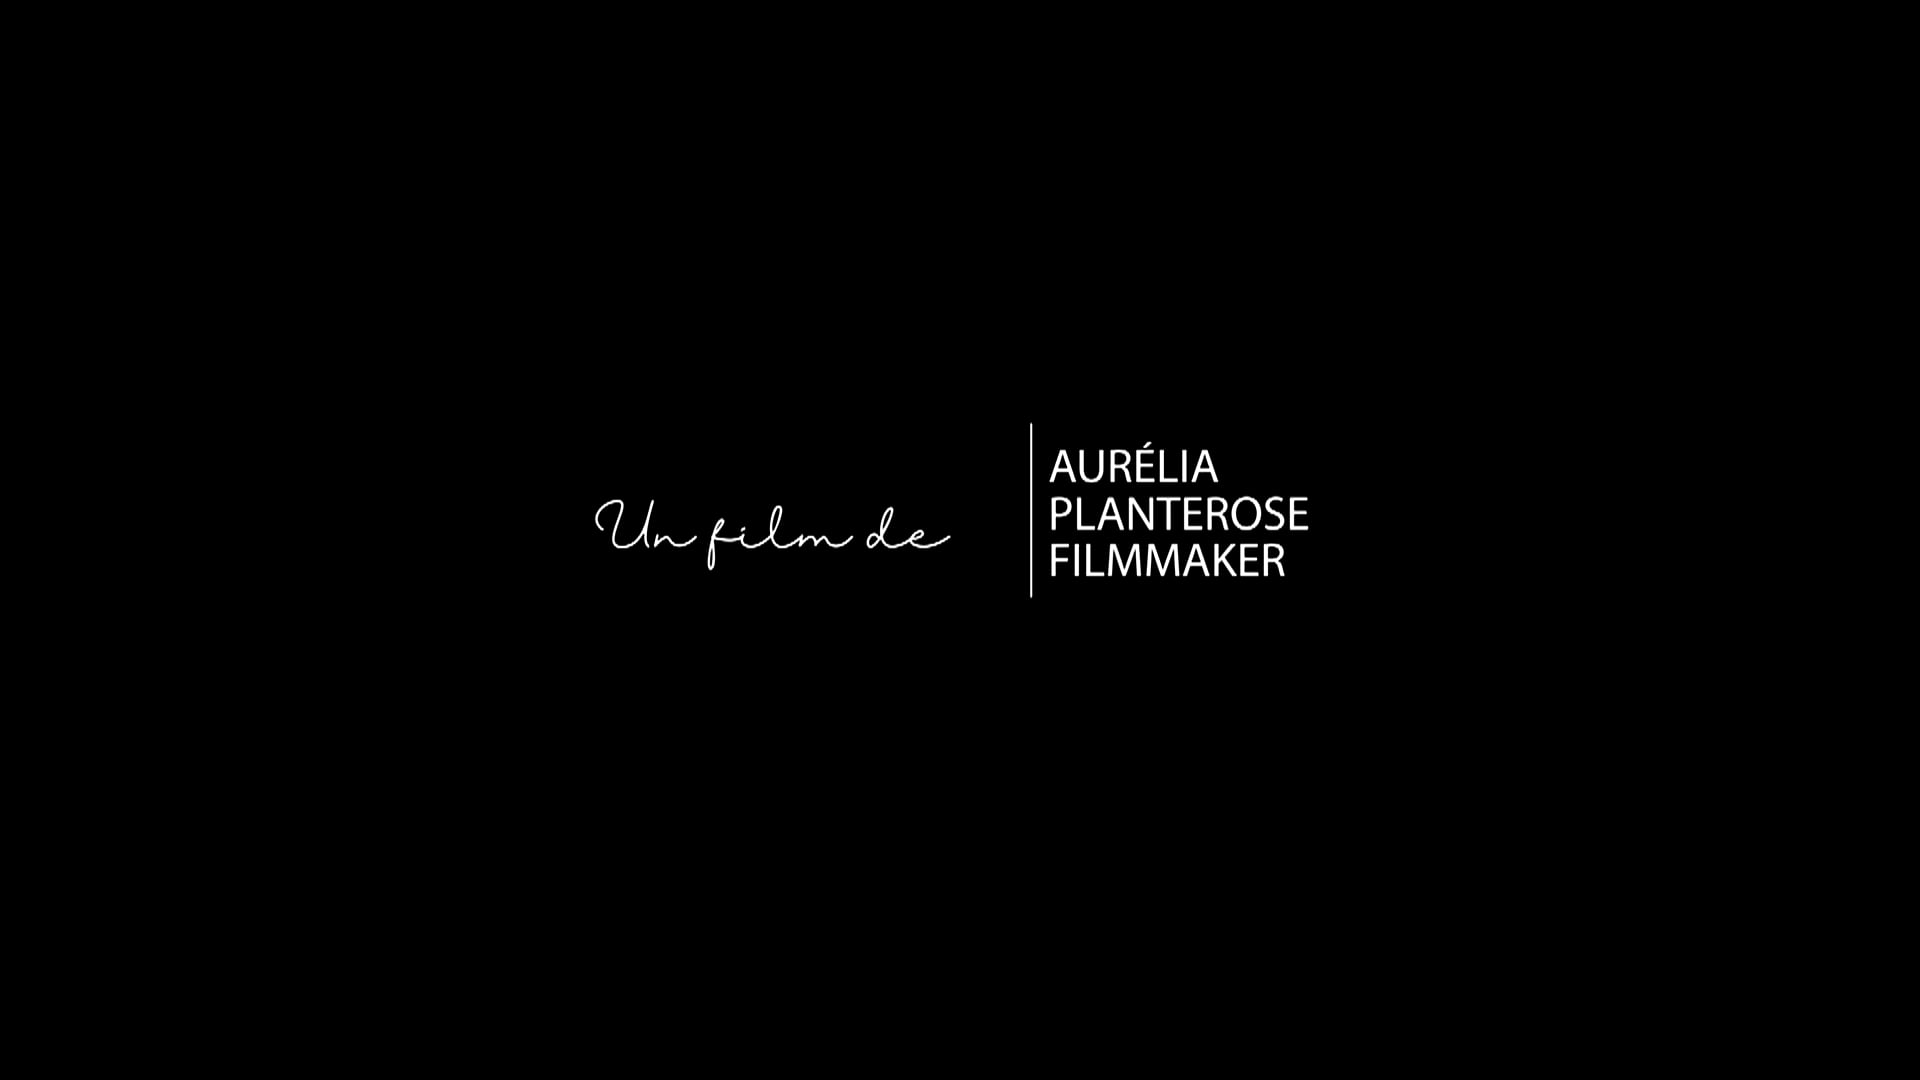 Aurélia Planterose Filmmaker